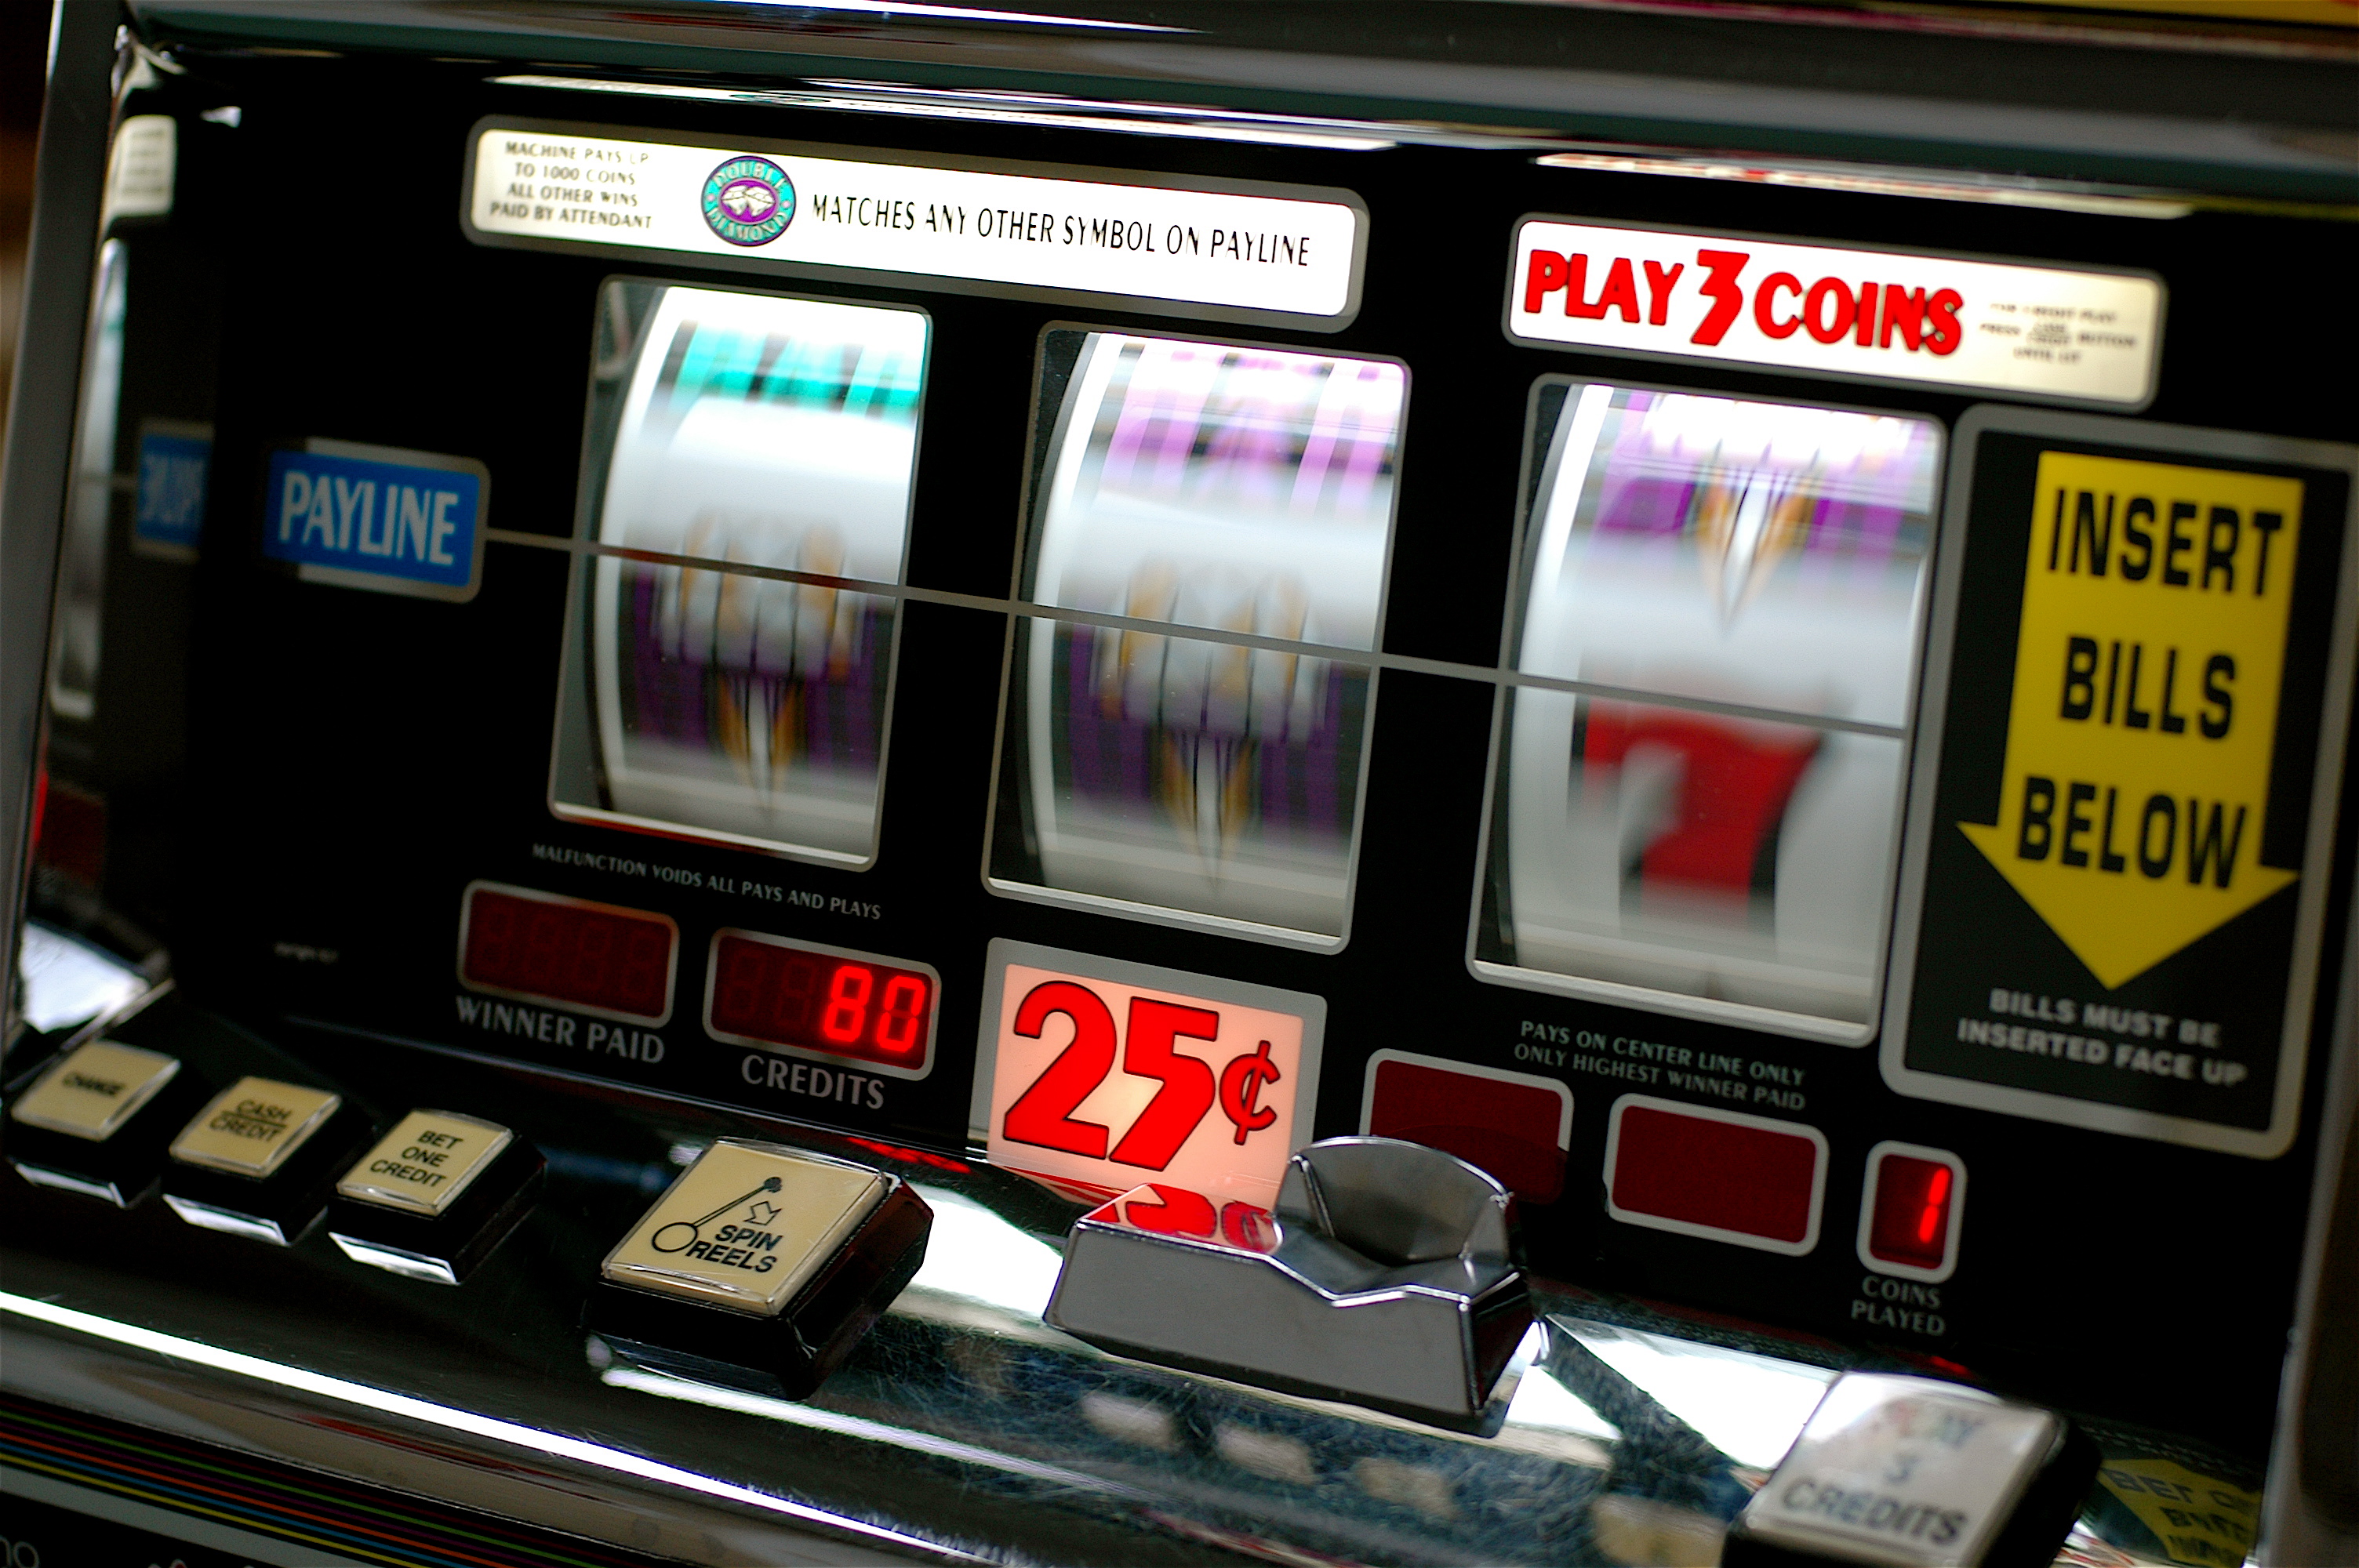 3. Evaluating the Effectiveness of Slot Machine Strategies